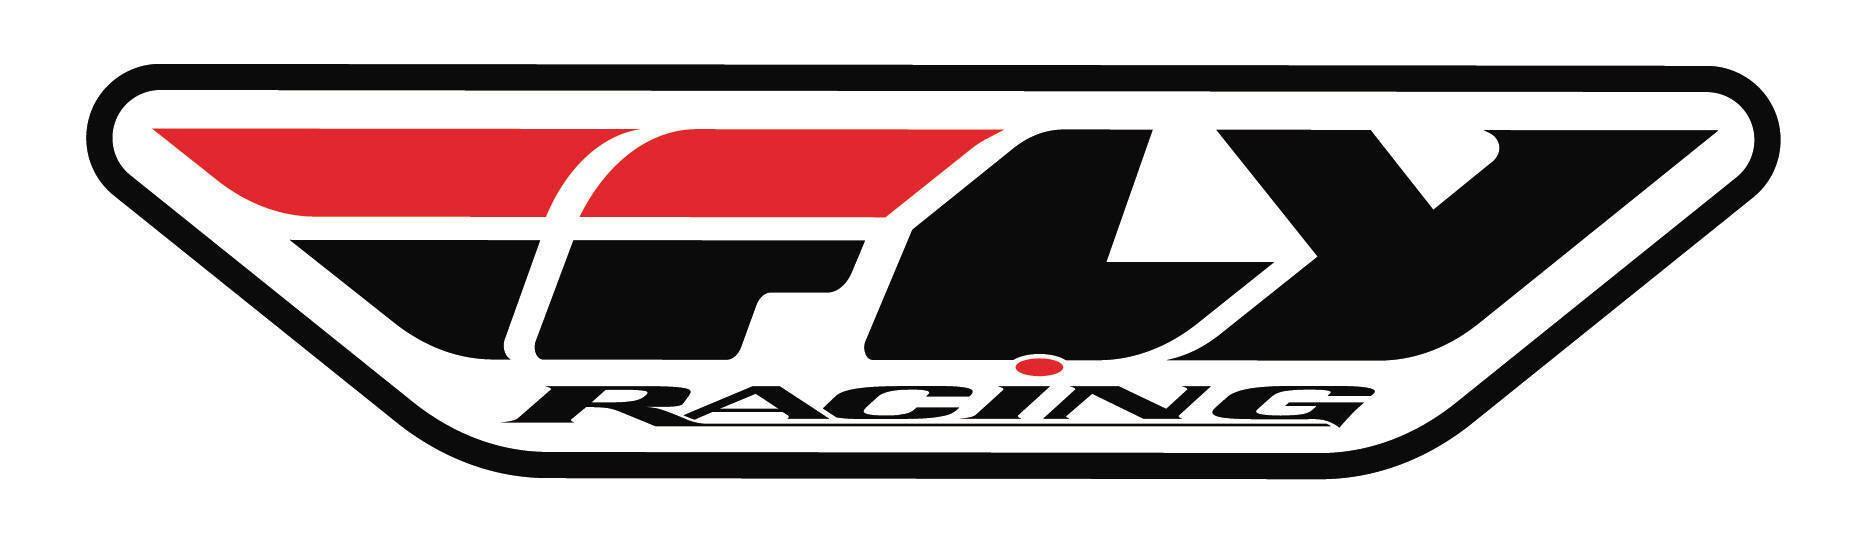 Racing Parts Logo - FLY RACING Enterprises, Inc